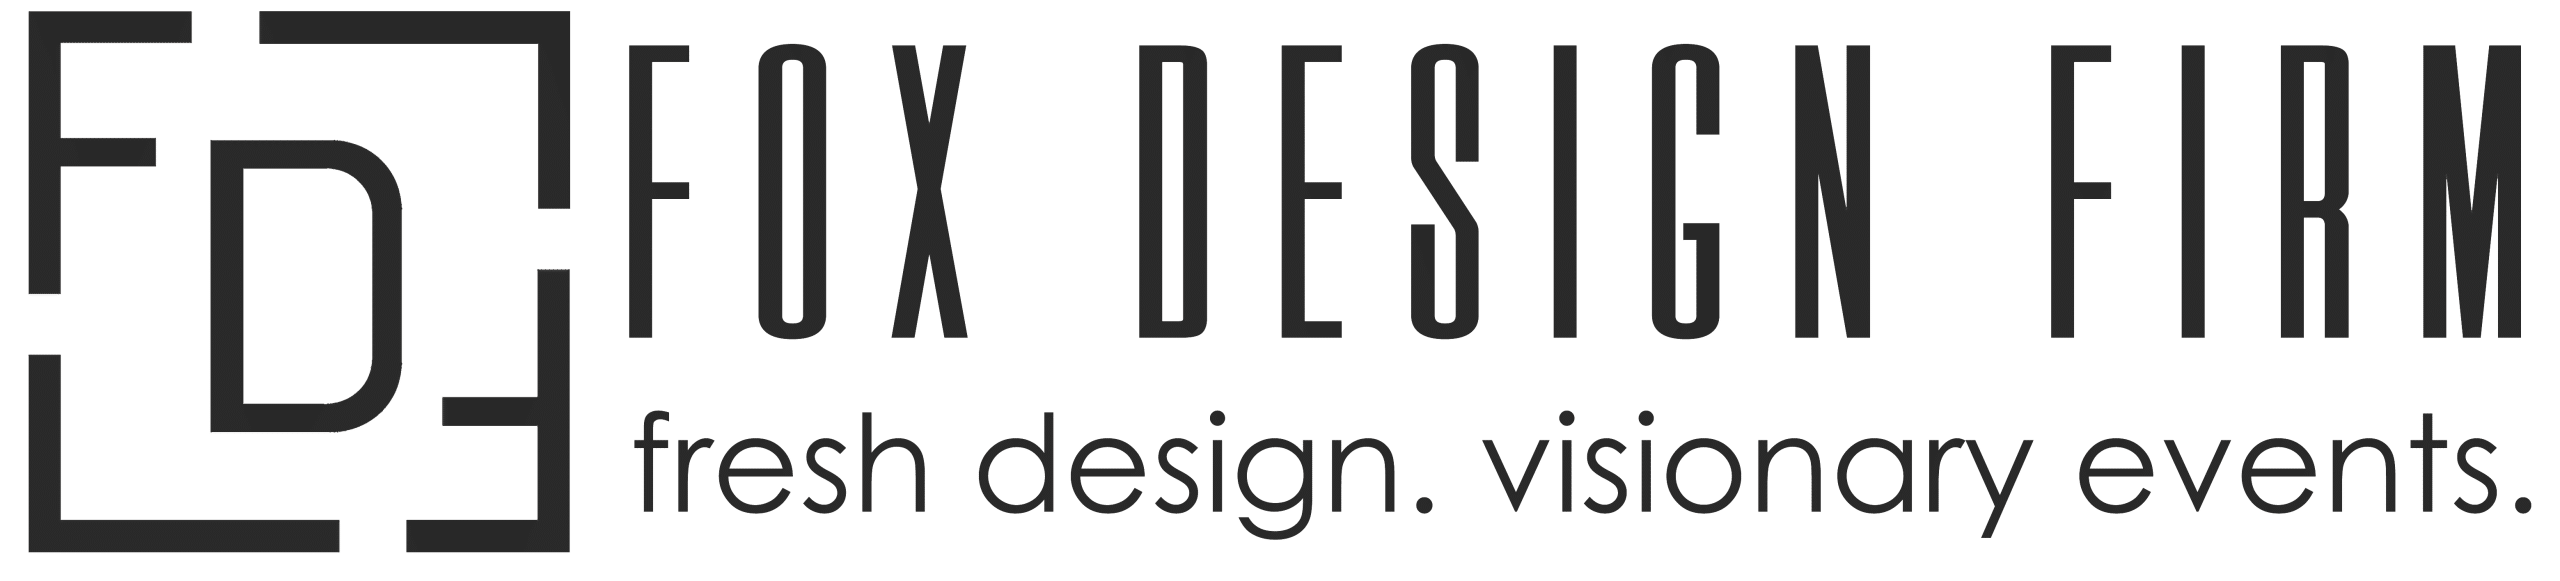 Fox Design Firm Logo